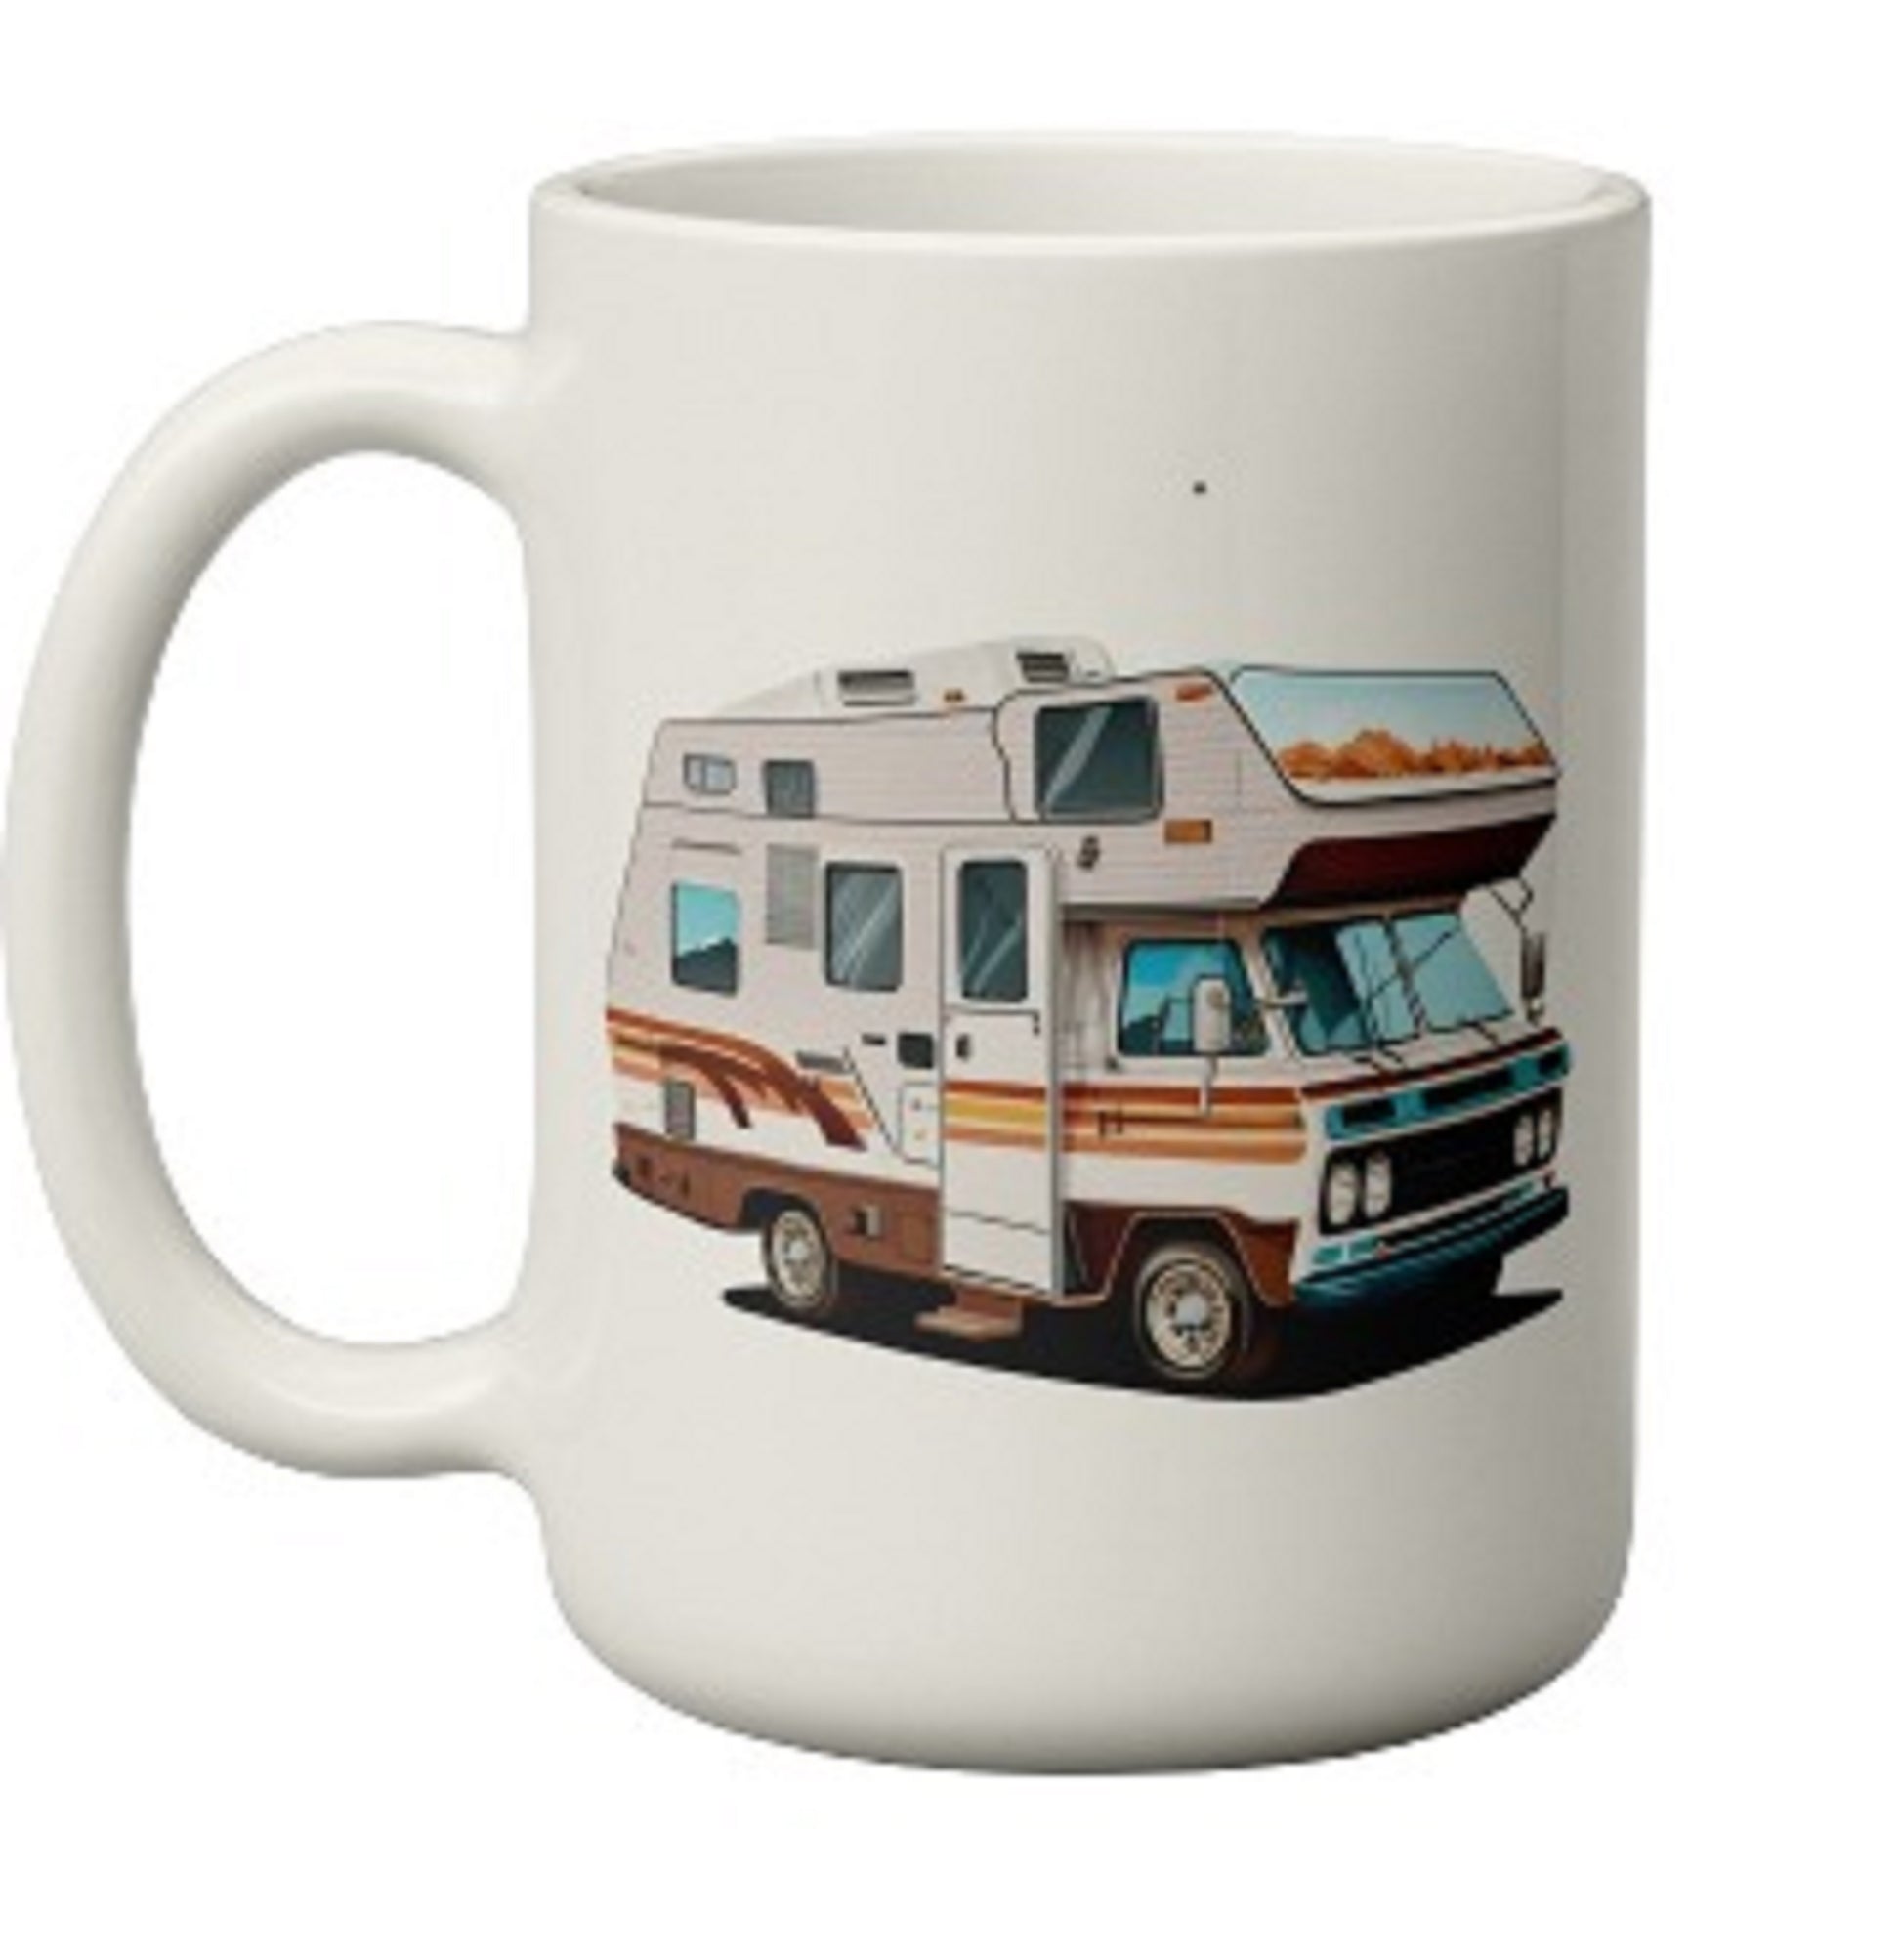  Vintage Coach Built Camper Van Mug - Choice of Designs by Free Spirit Accessories sold by Free Spirit Accessories